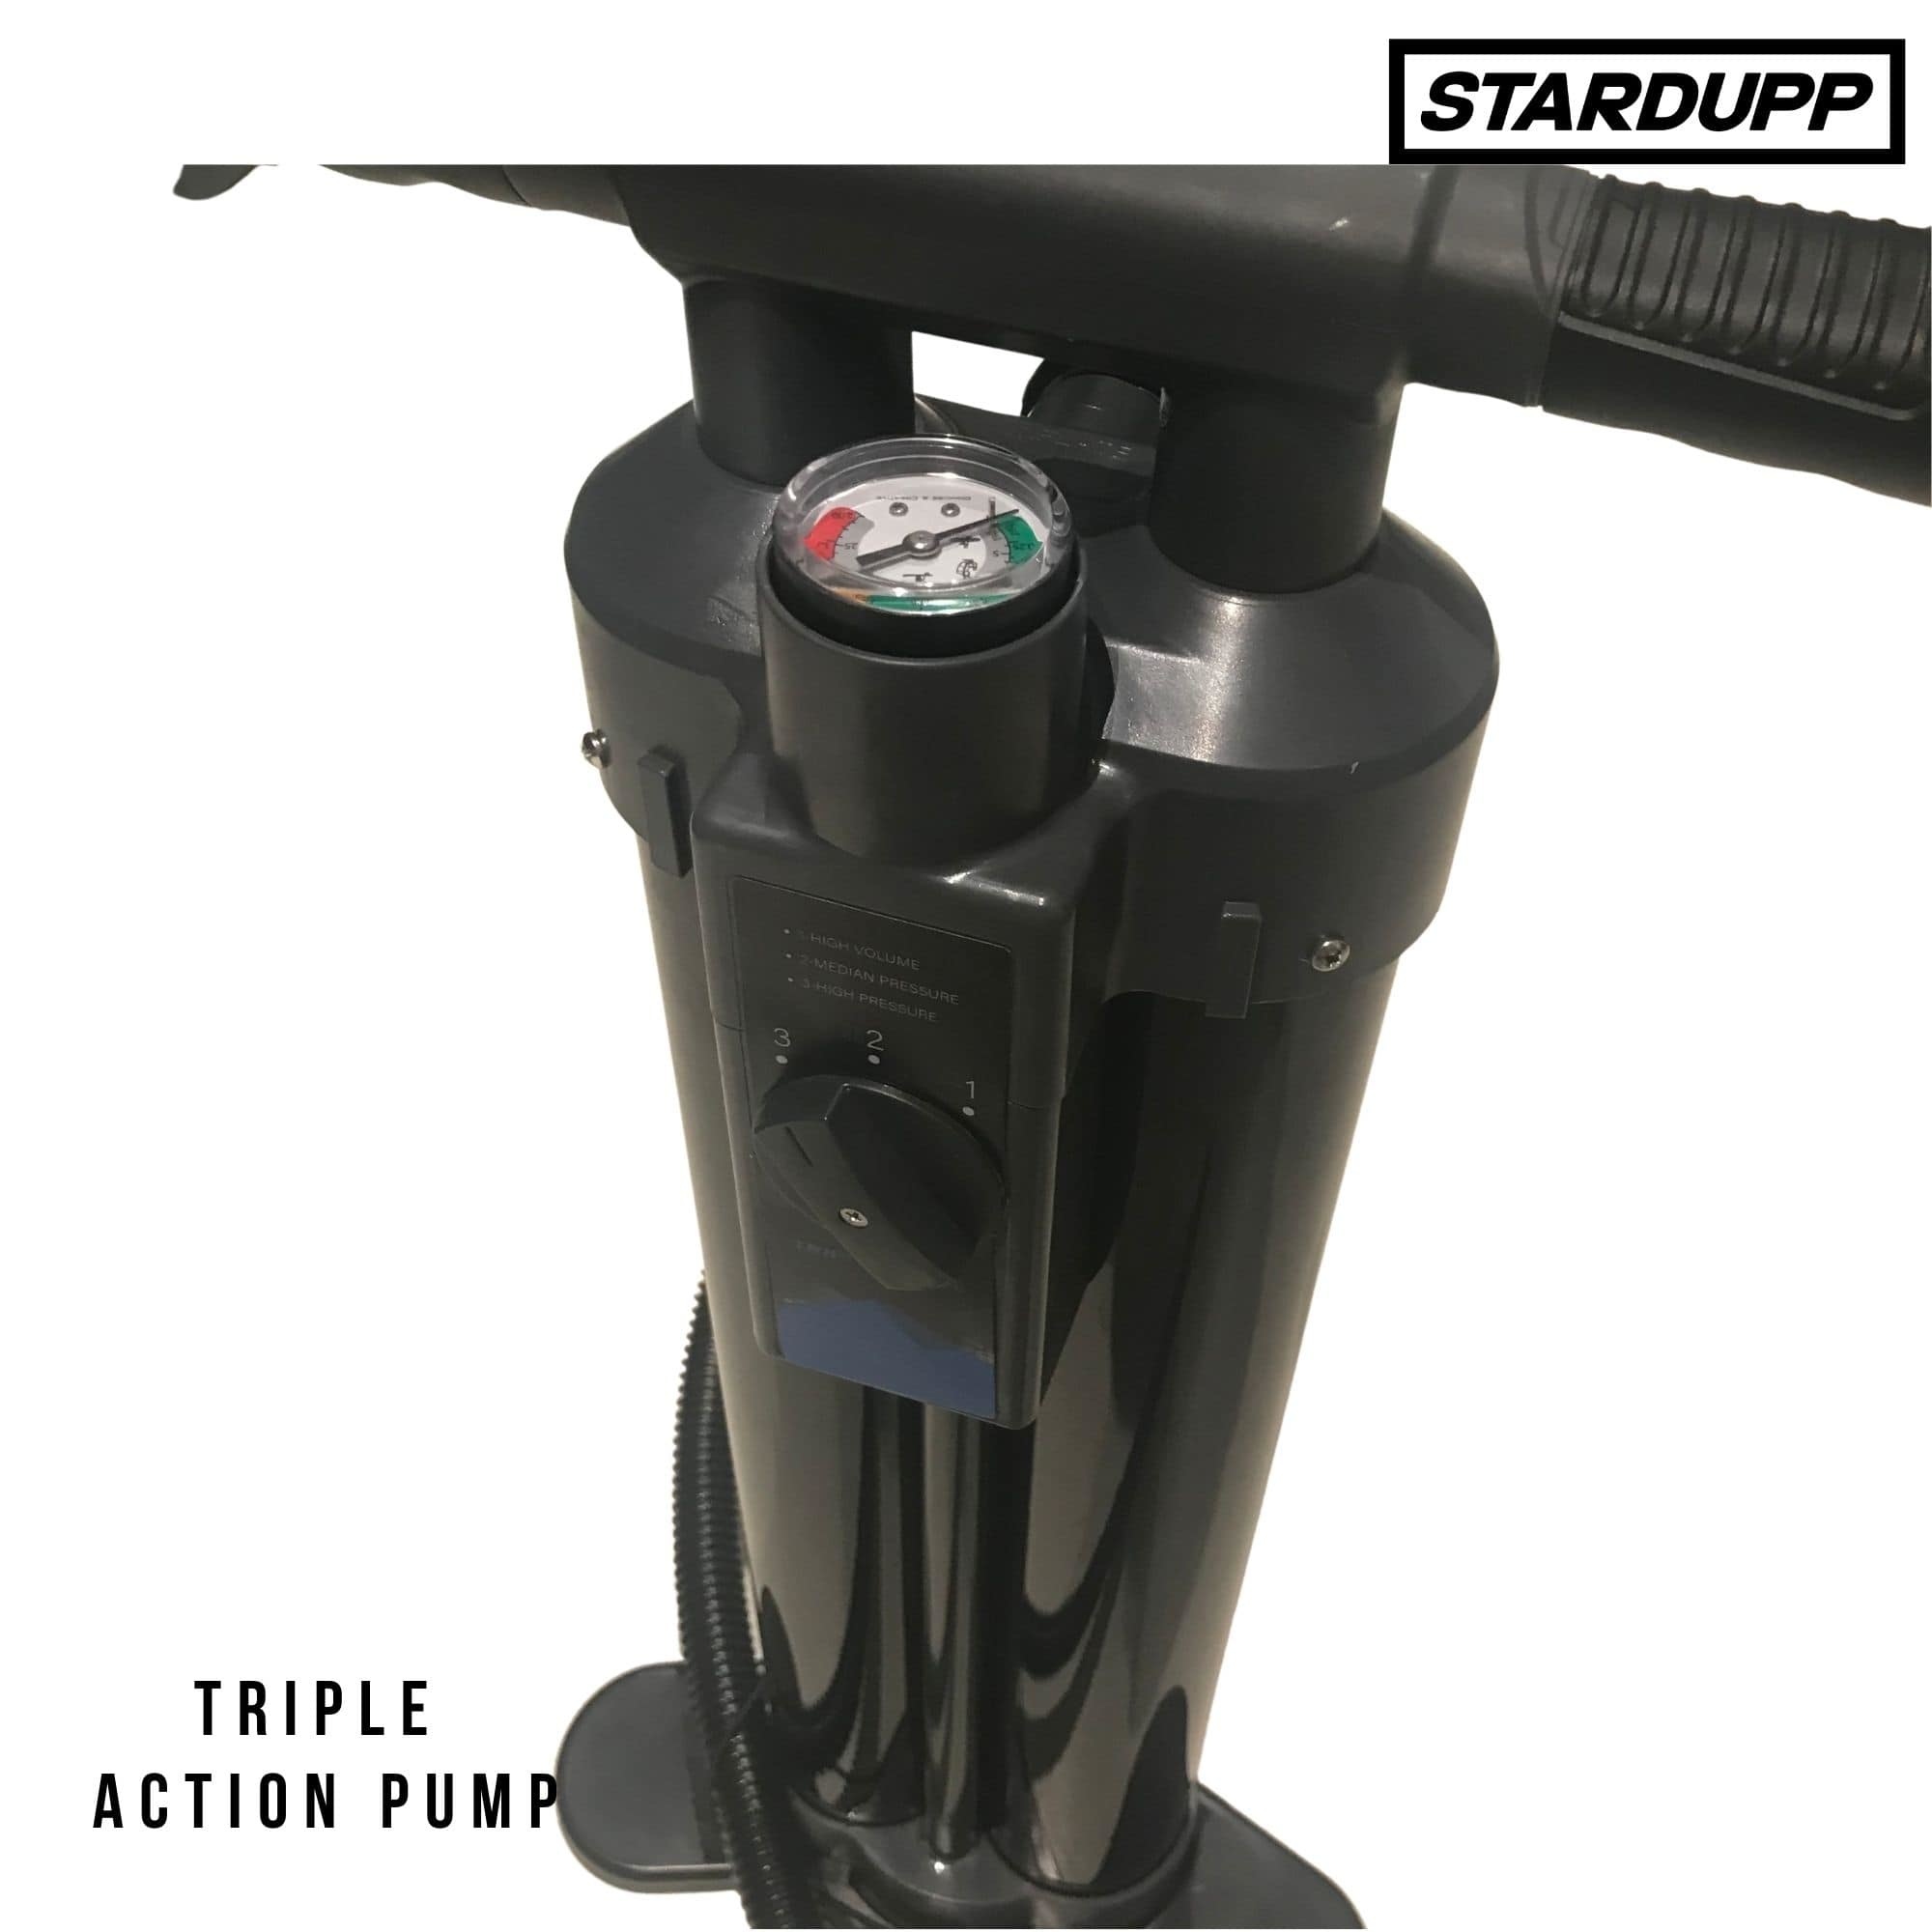 Stardupp 12V Li-ion battery pump rechargeable